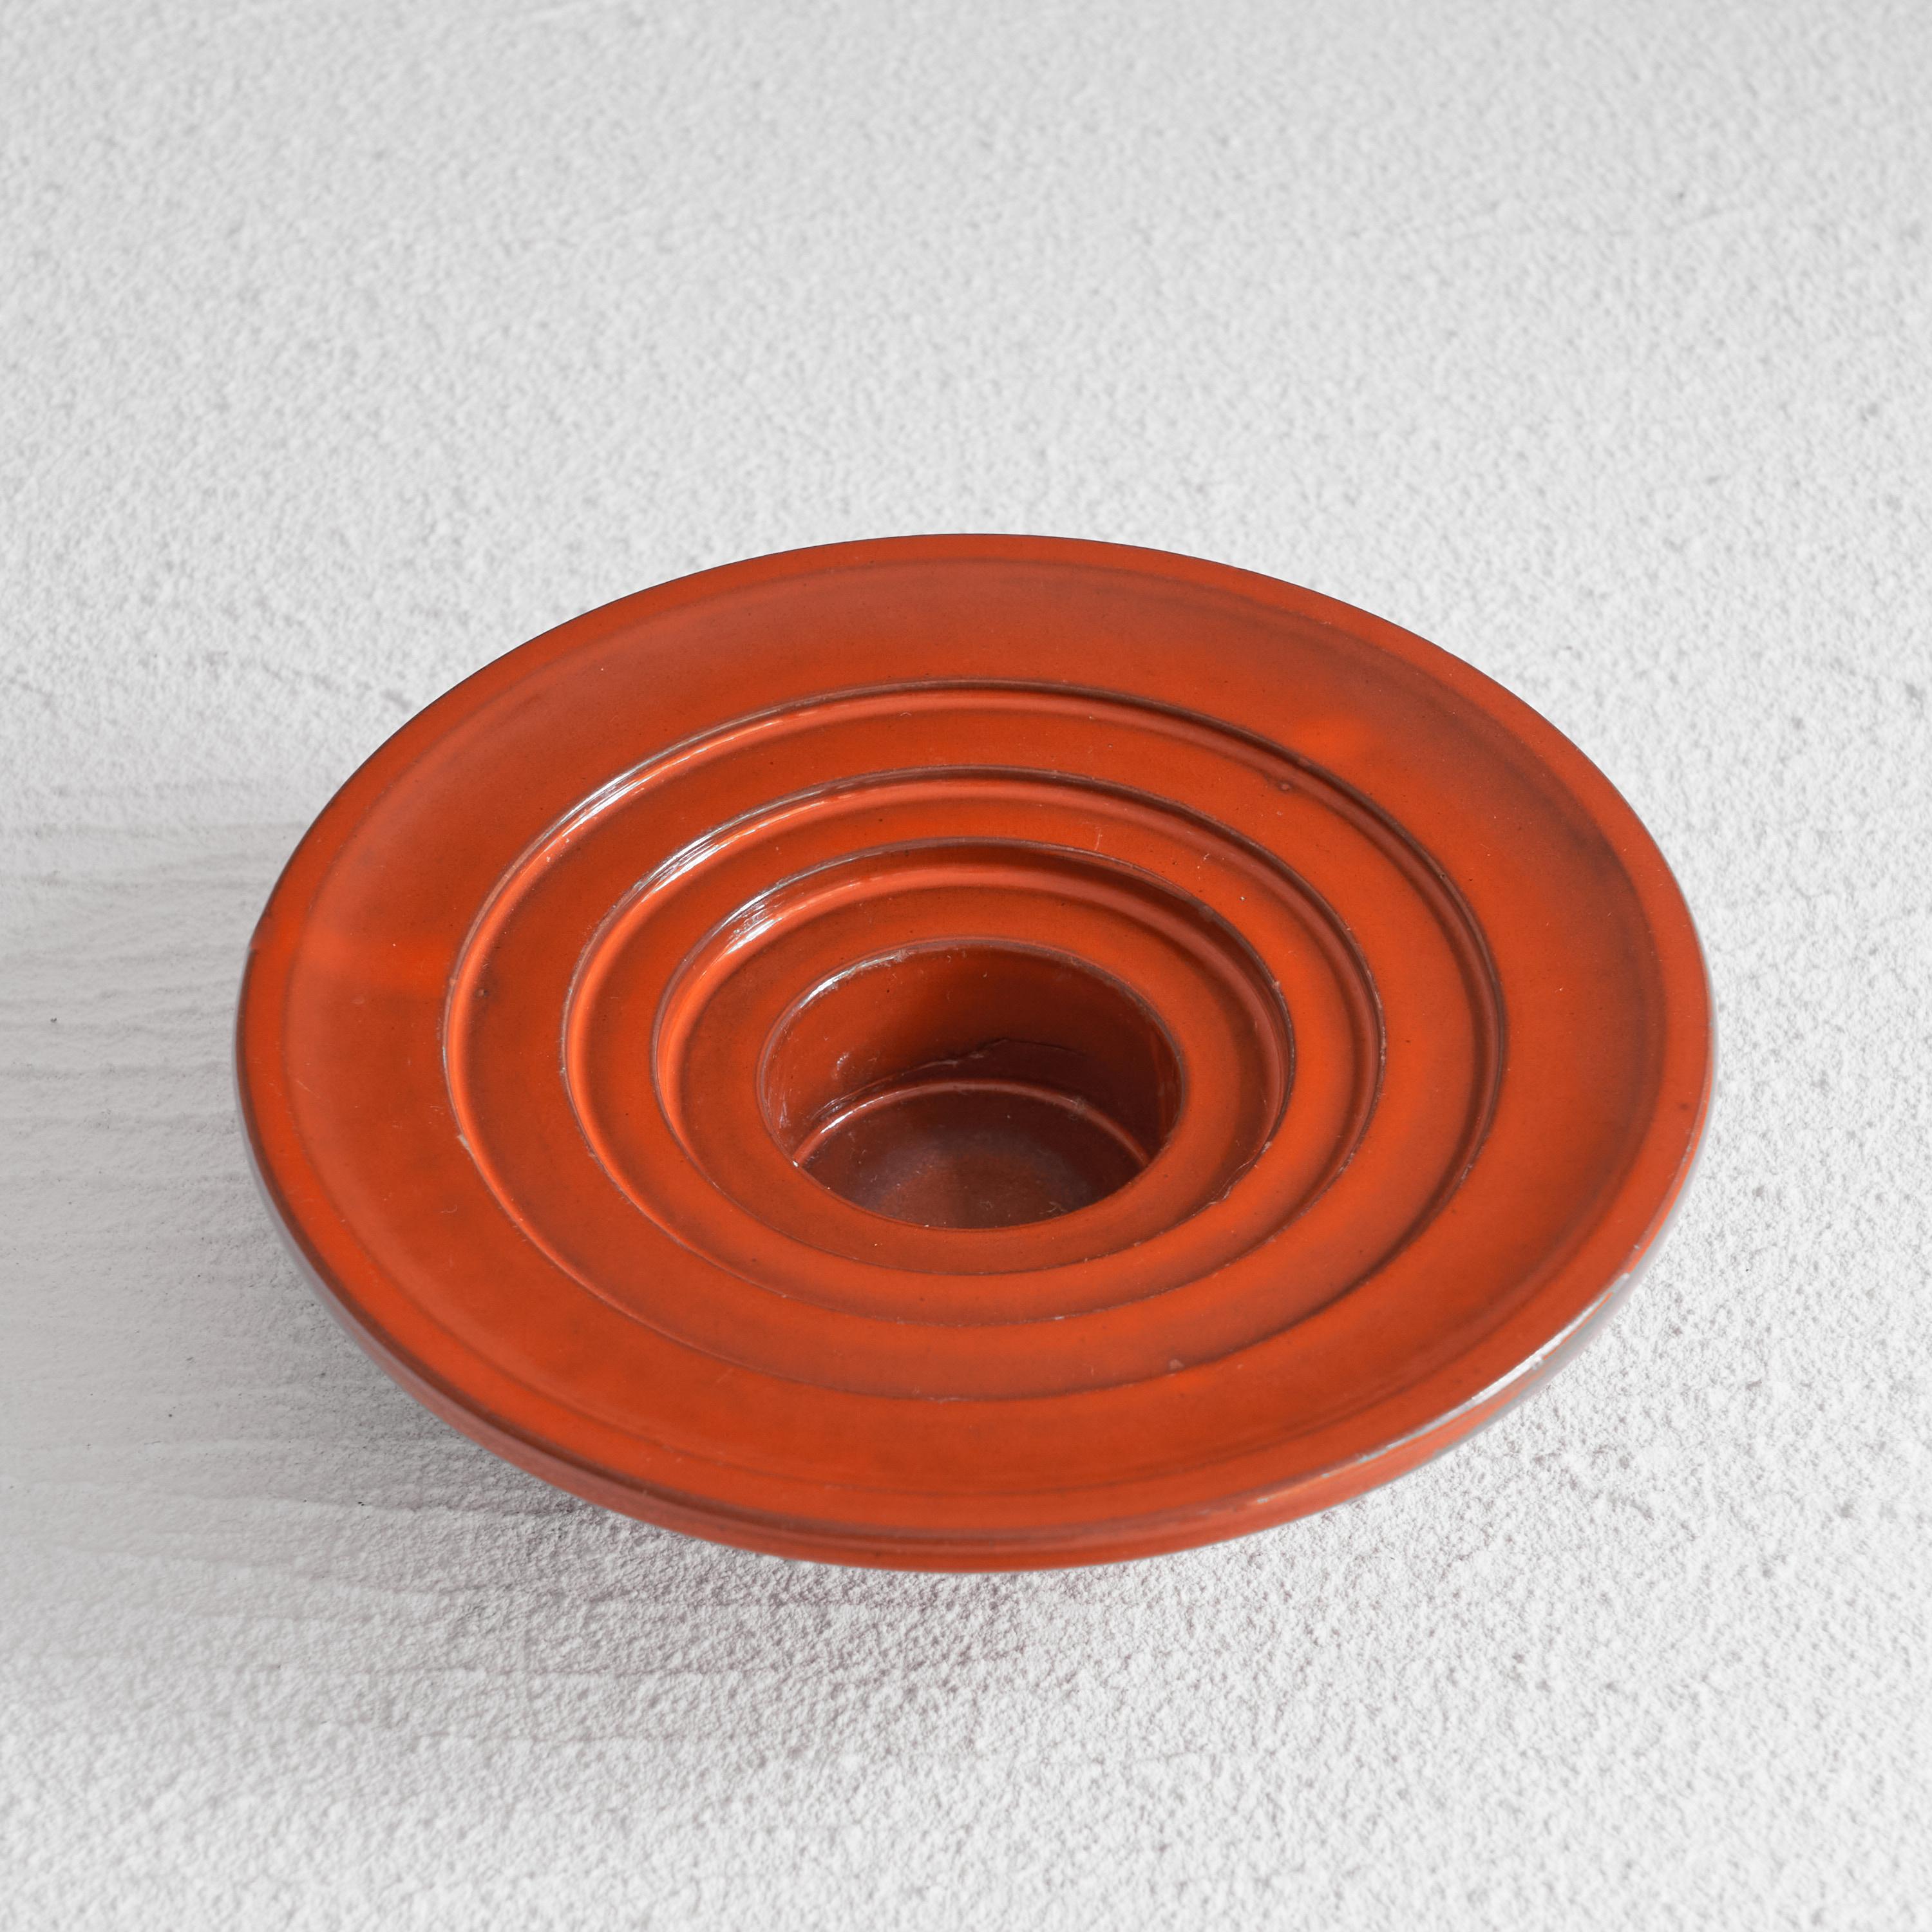 20th Century Mid Century Orange Glazed Ceramic Candle Holder or Bowl For Sale